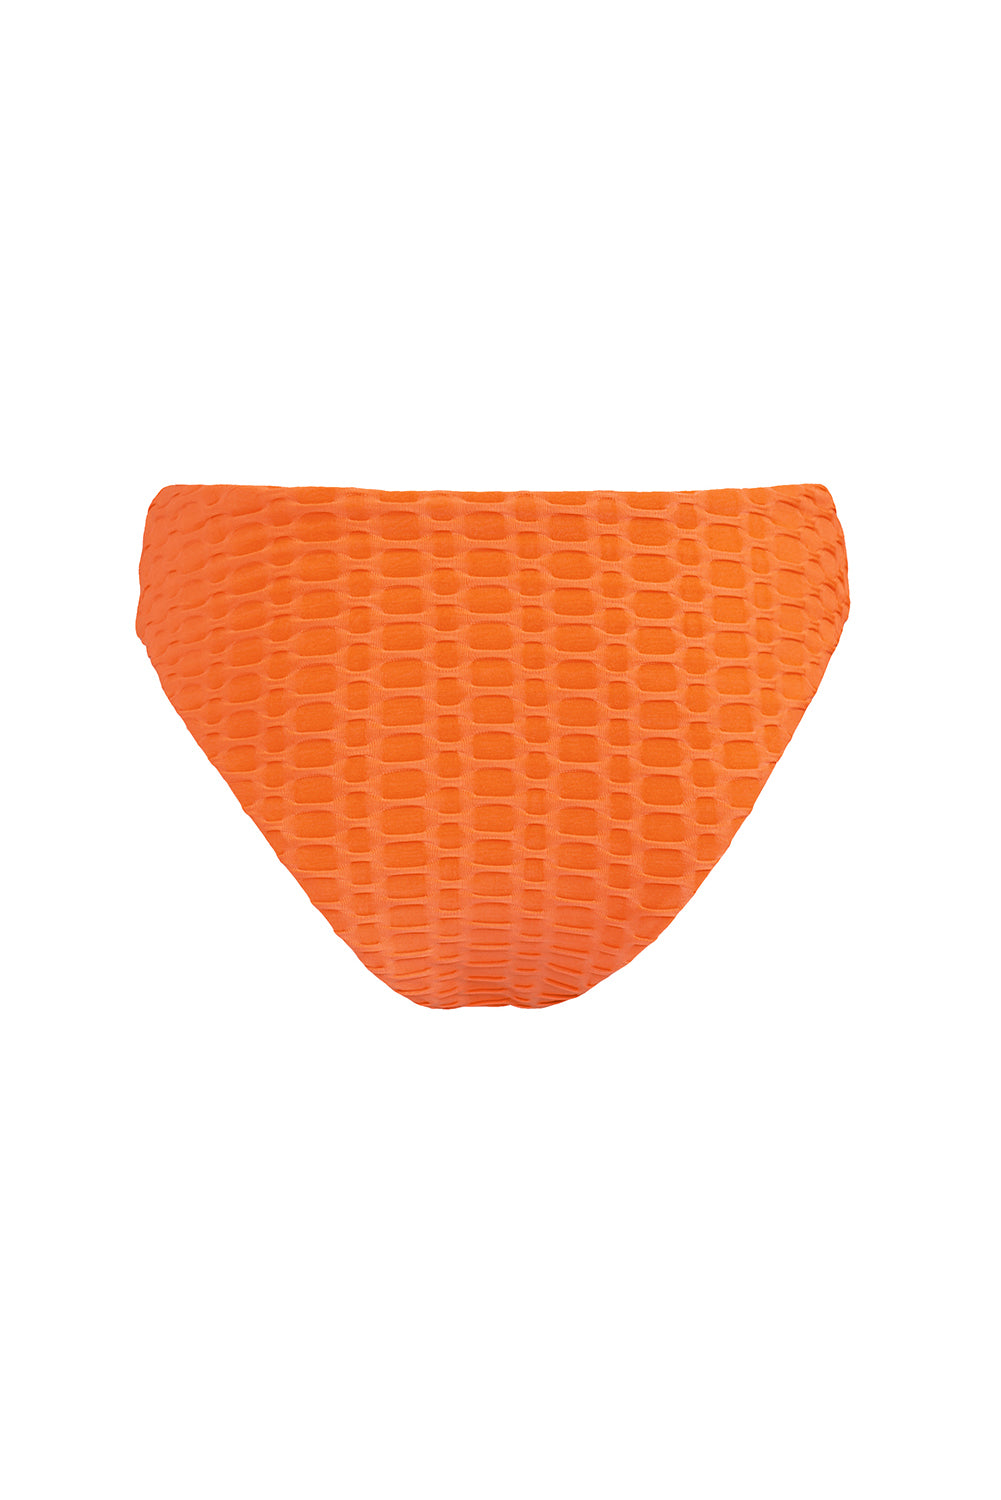 Orange Honey Comb Textured Bikini Bottoms